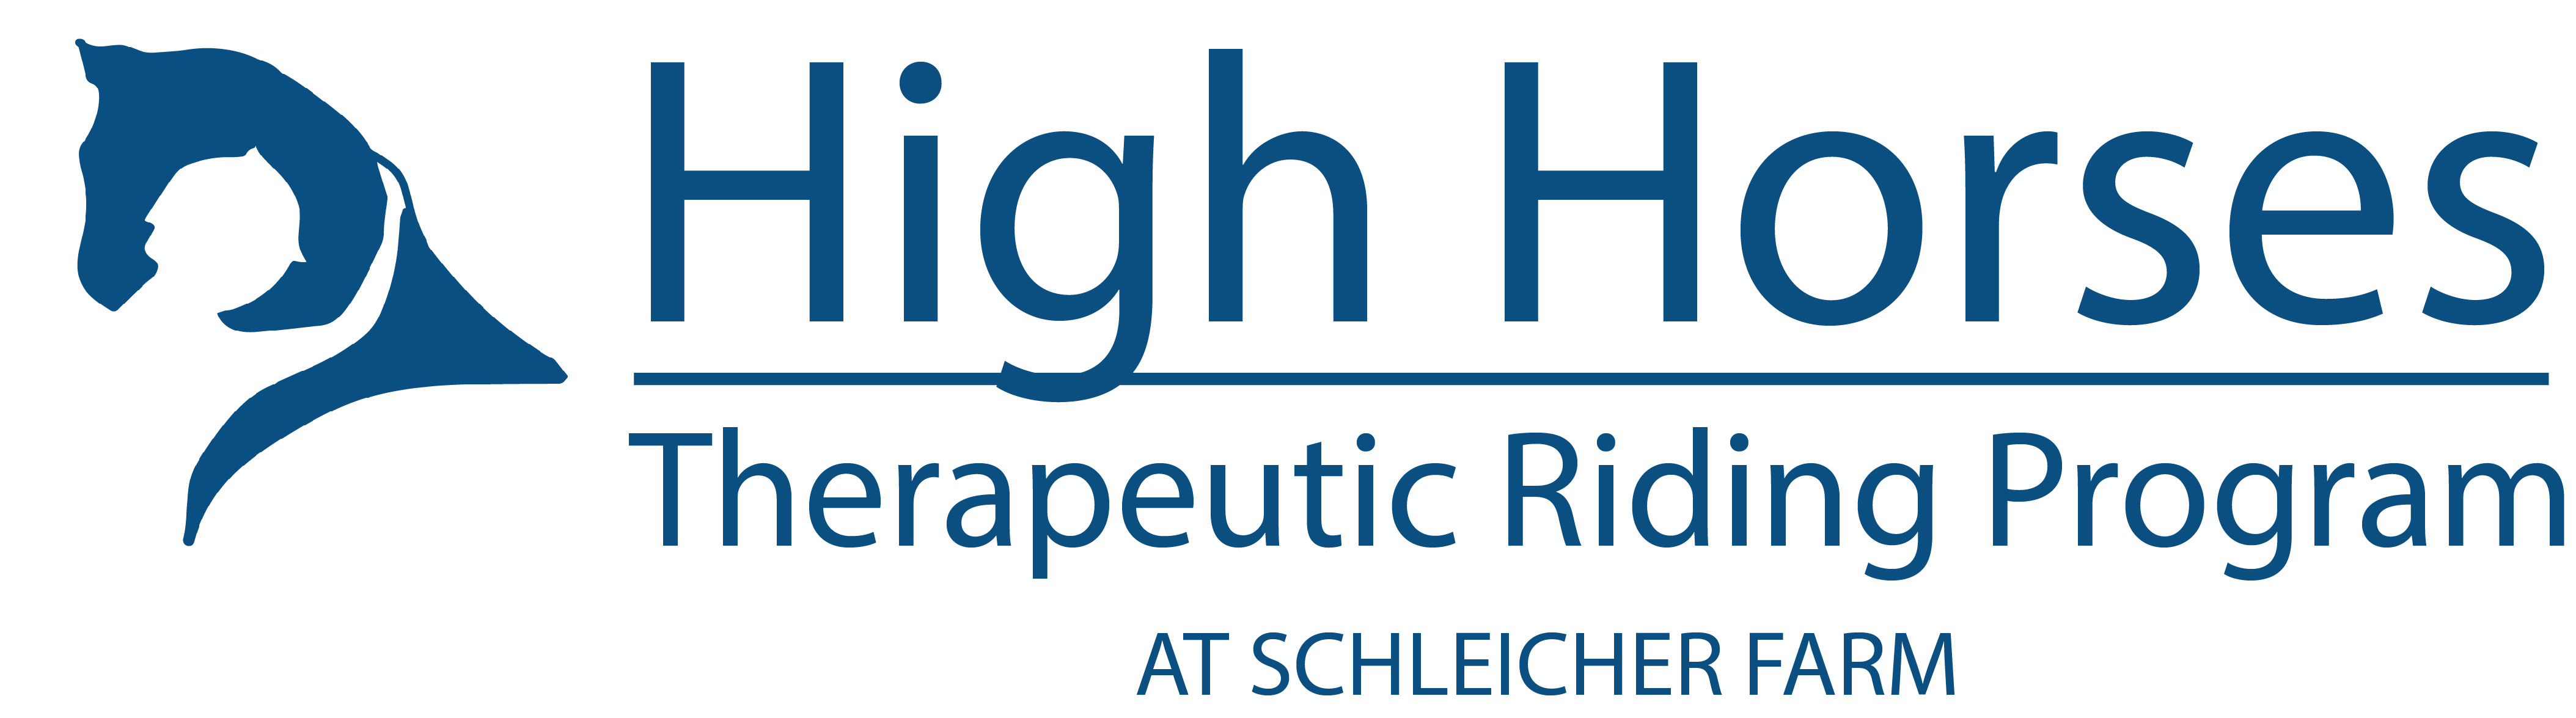 High Horses Therapeutic Riding Program logo